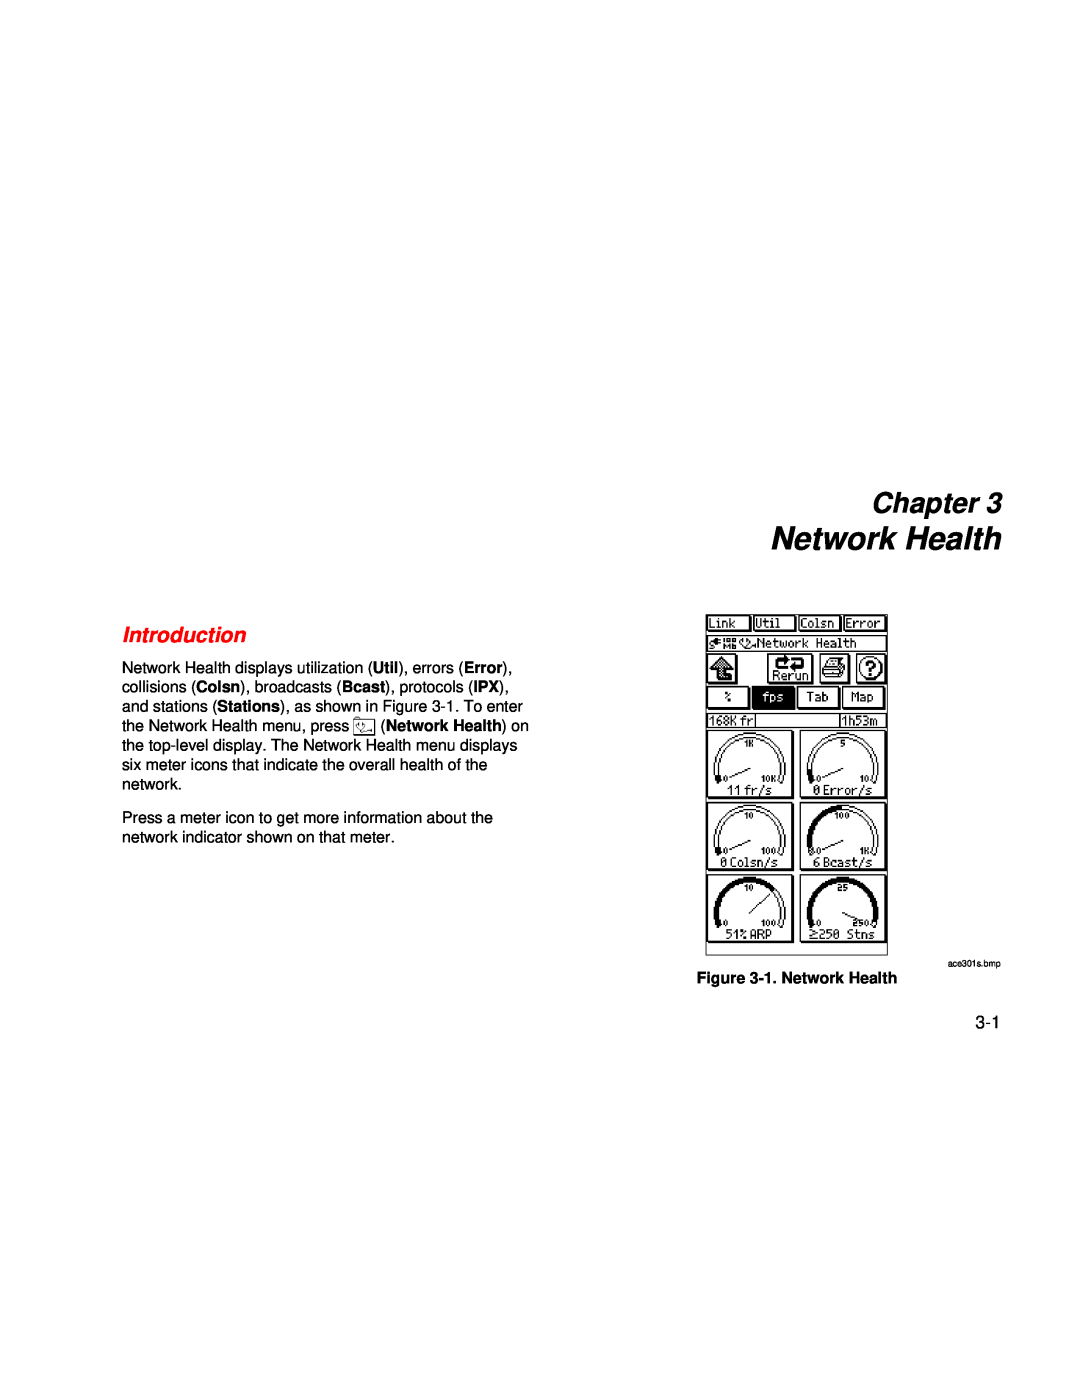 Fluke Series II user manual Chapter, Introduction, 1. Network Health 